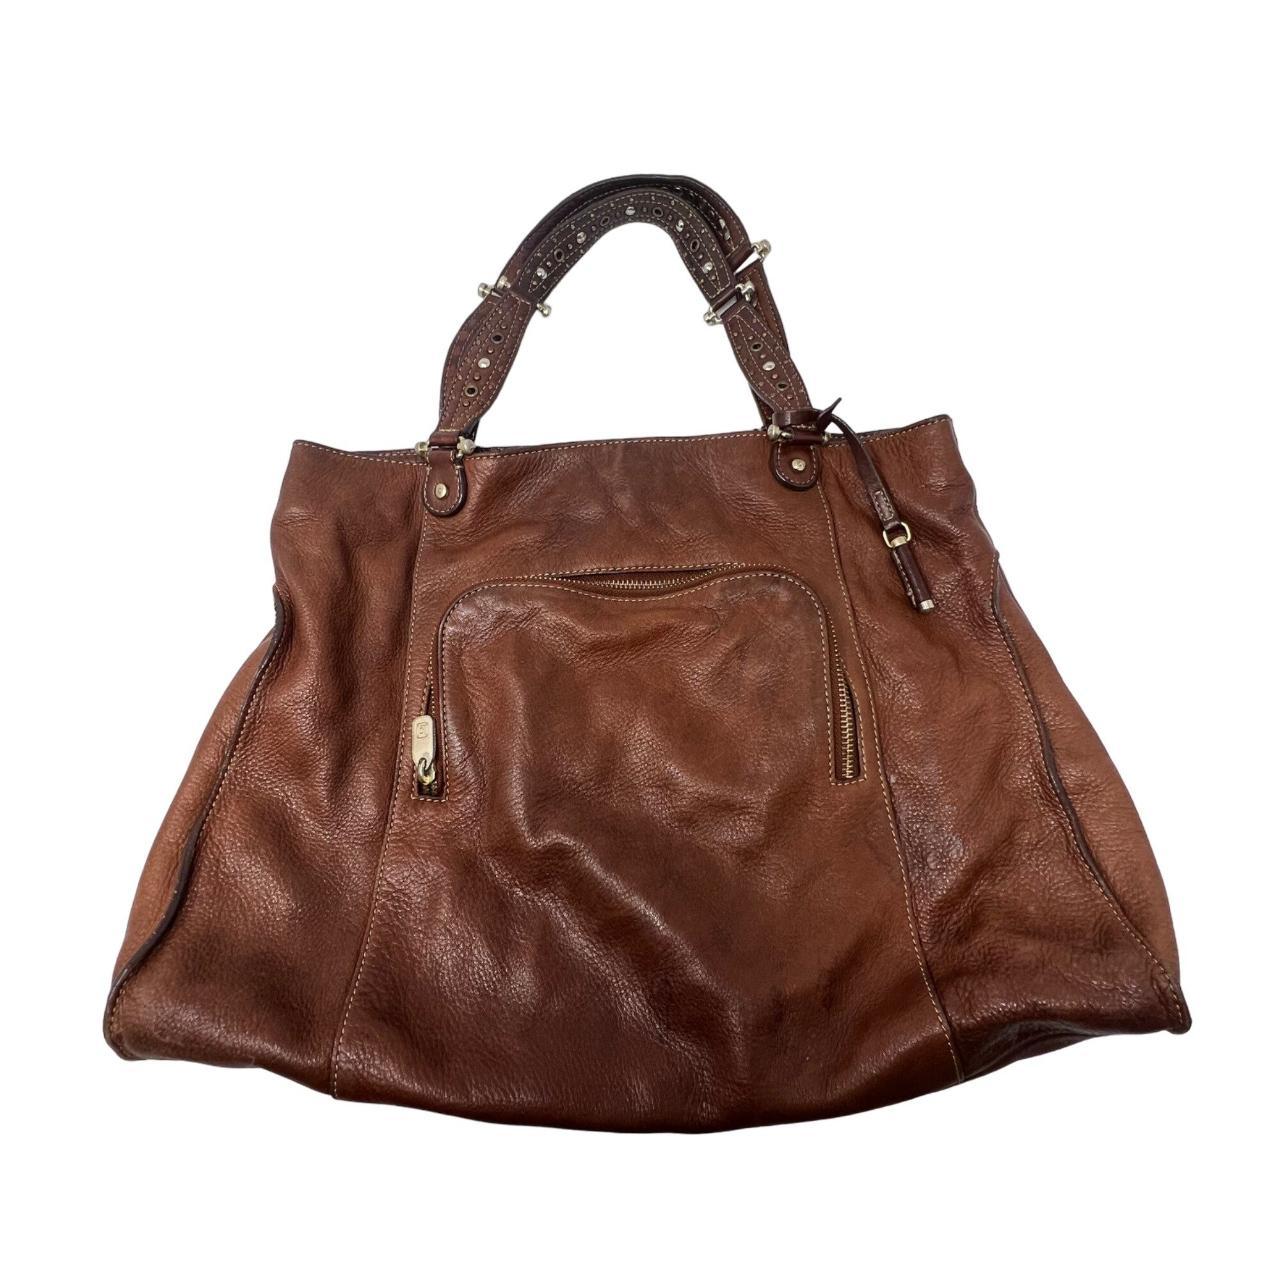 Liz Claiborne, Bags, Lc Leather Bag